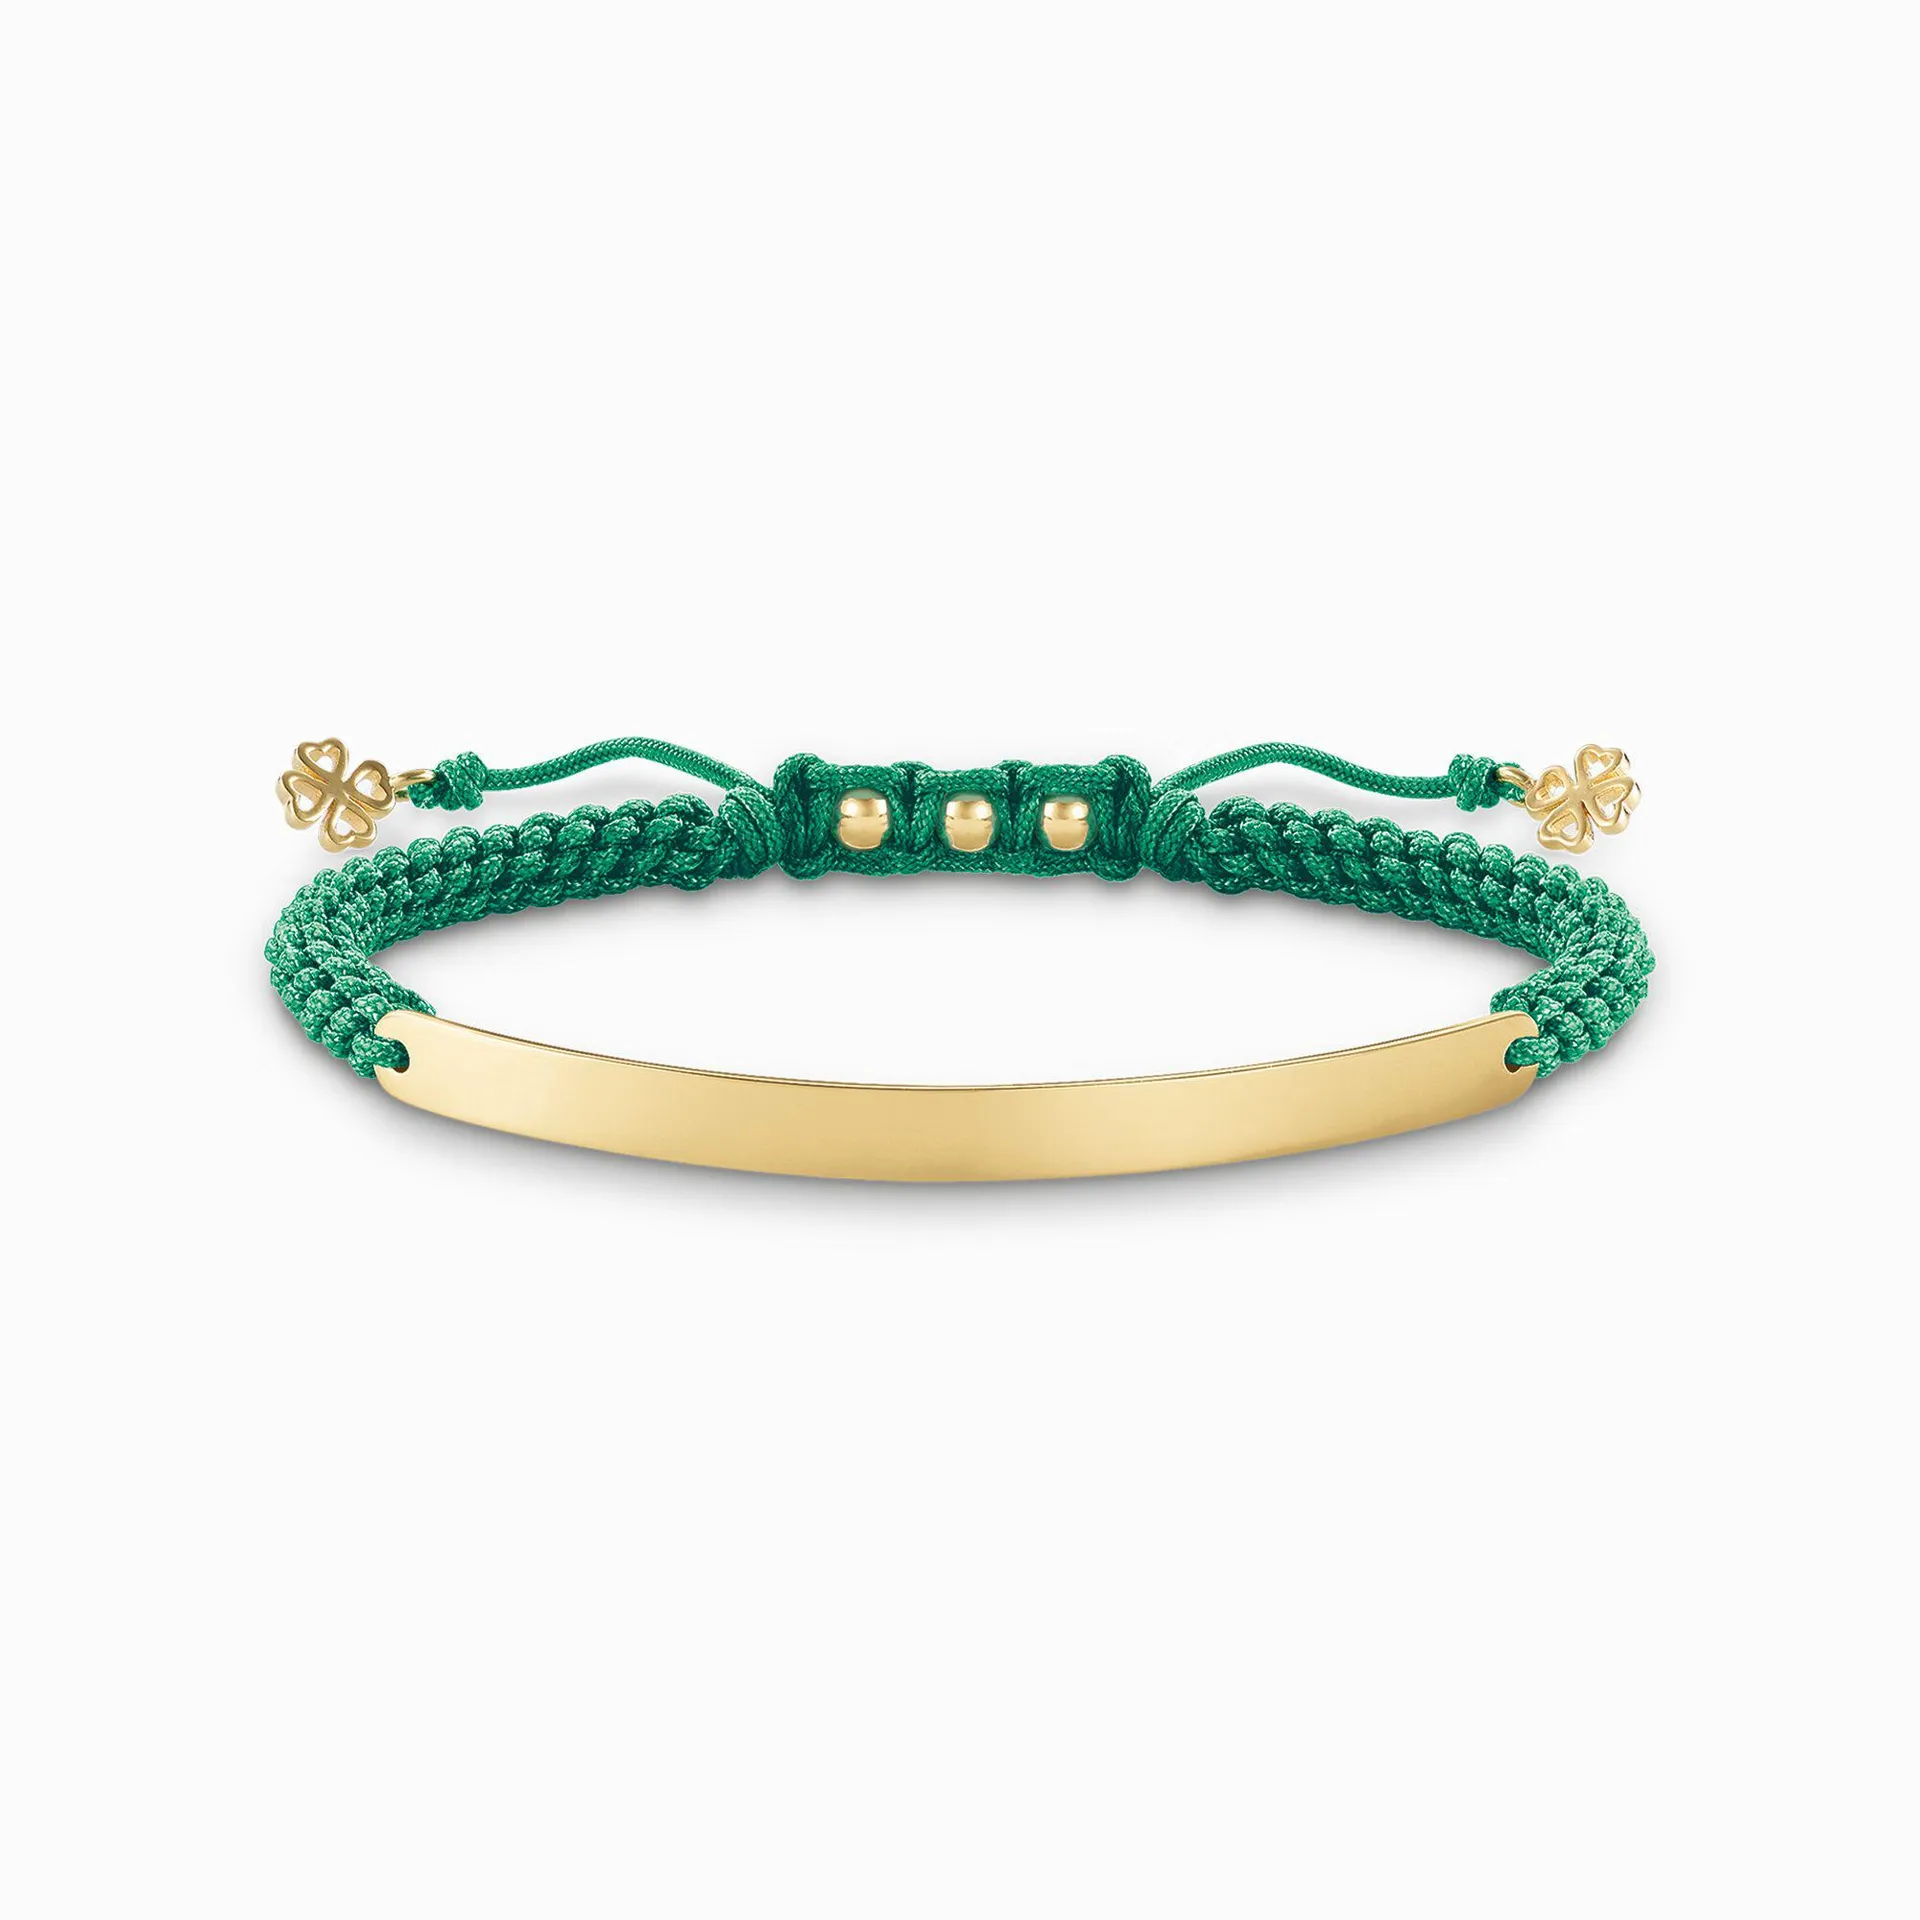 Bracelet green cloverleaf